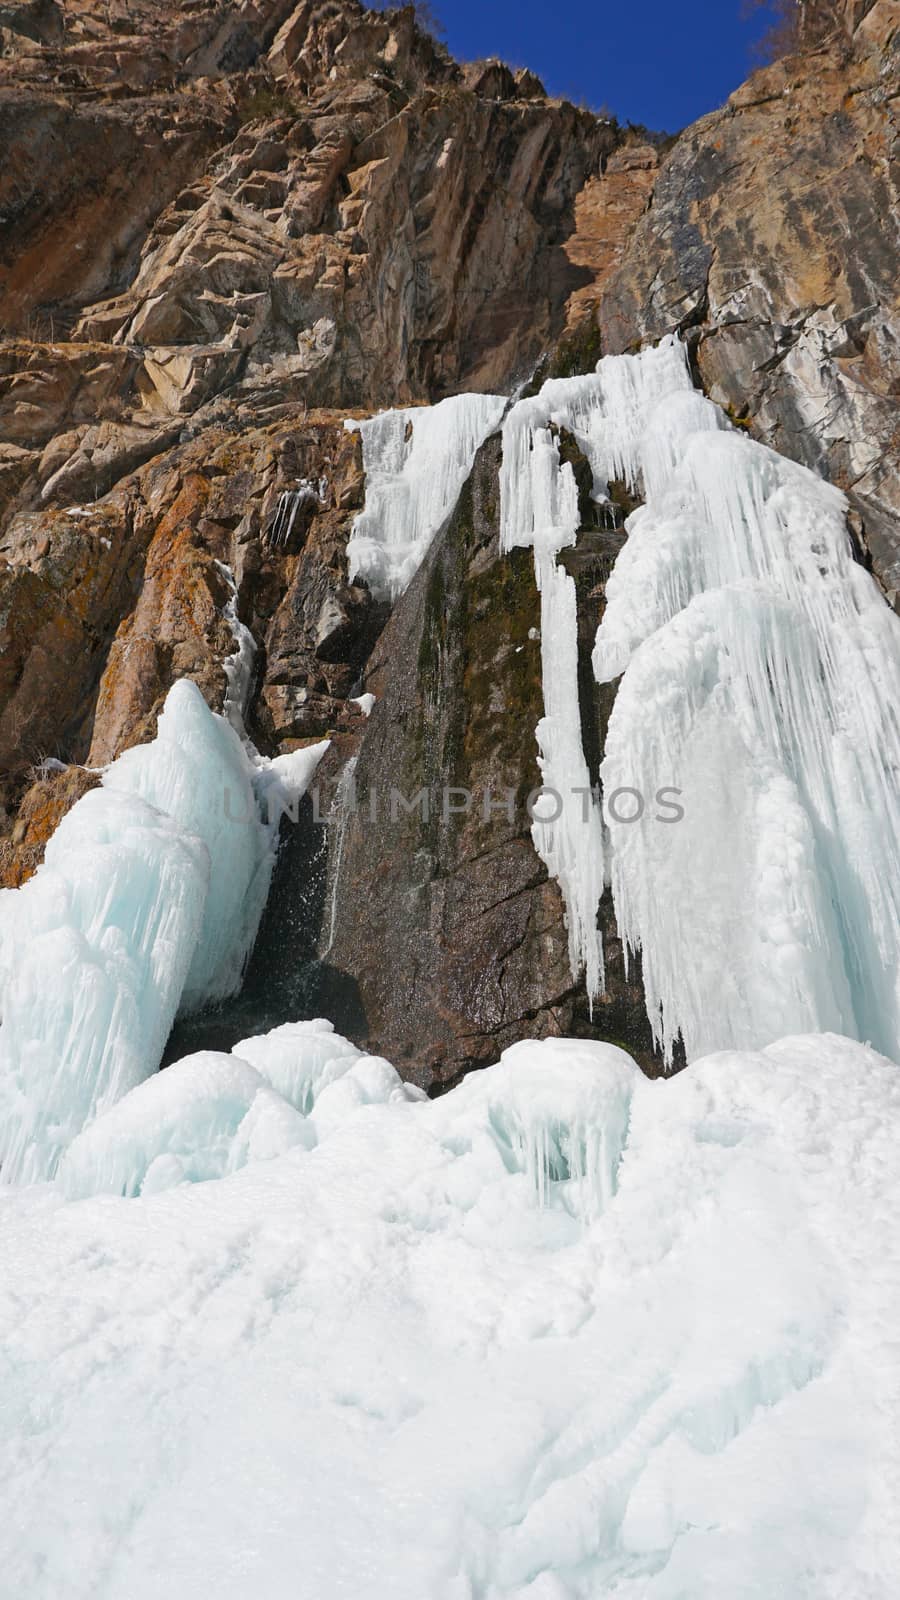 Frozen waterfall among the rocks. by Passcal